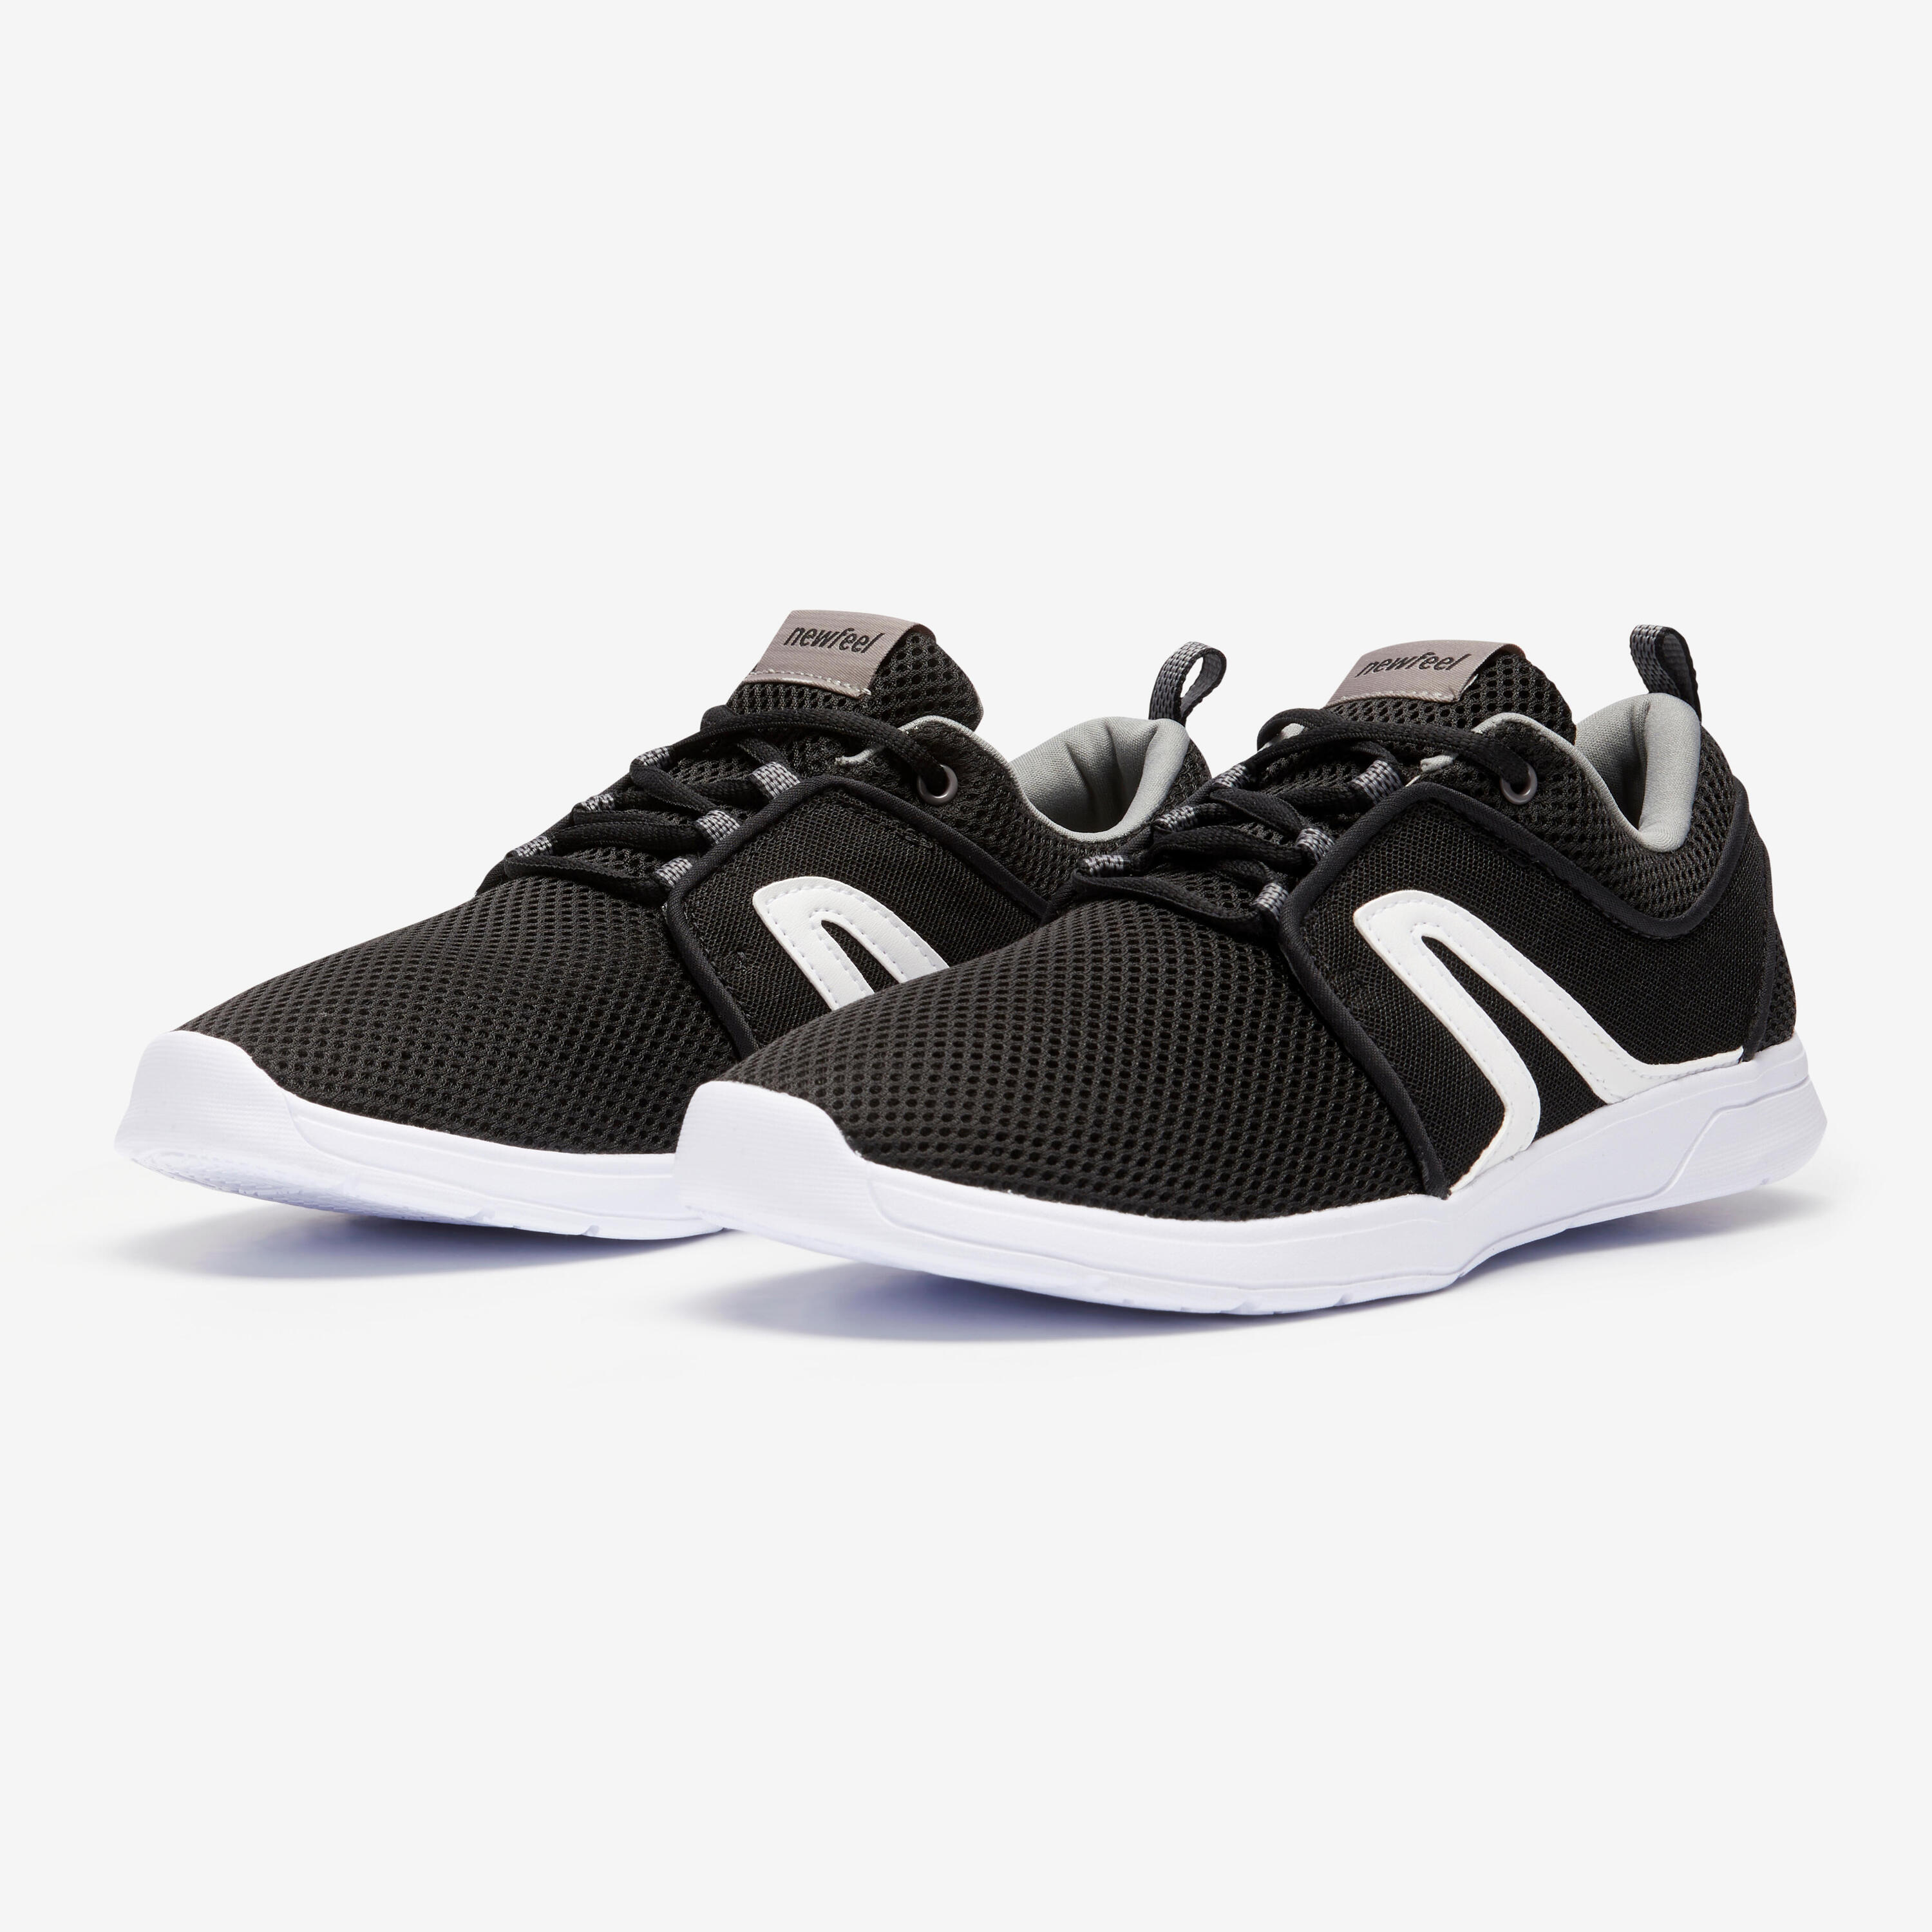 Soft 140 Mesh Men's Urban Walking Shoes - Black/White 7/8